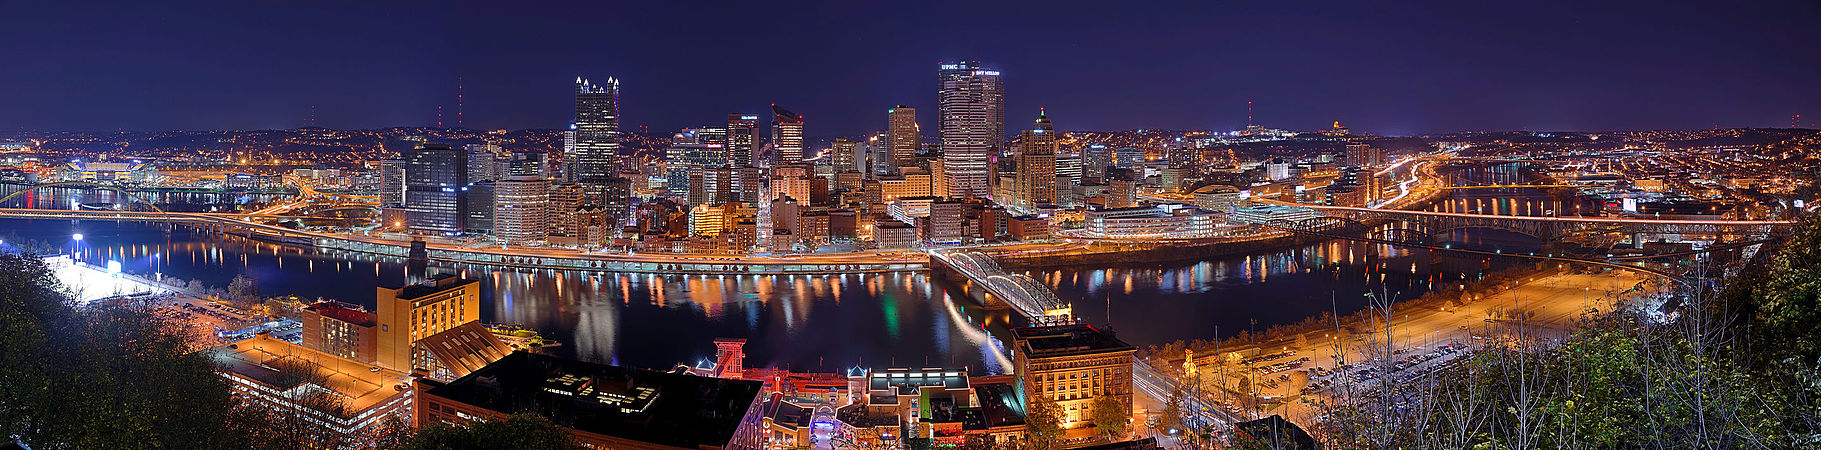 Pittsburgh #11